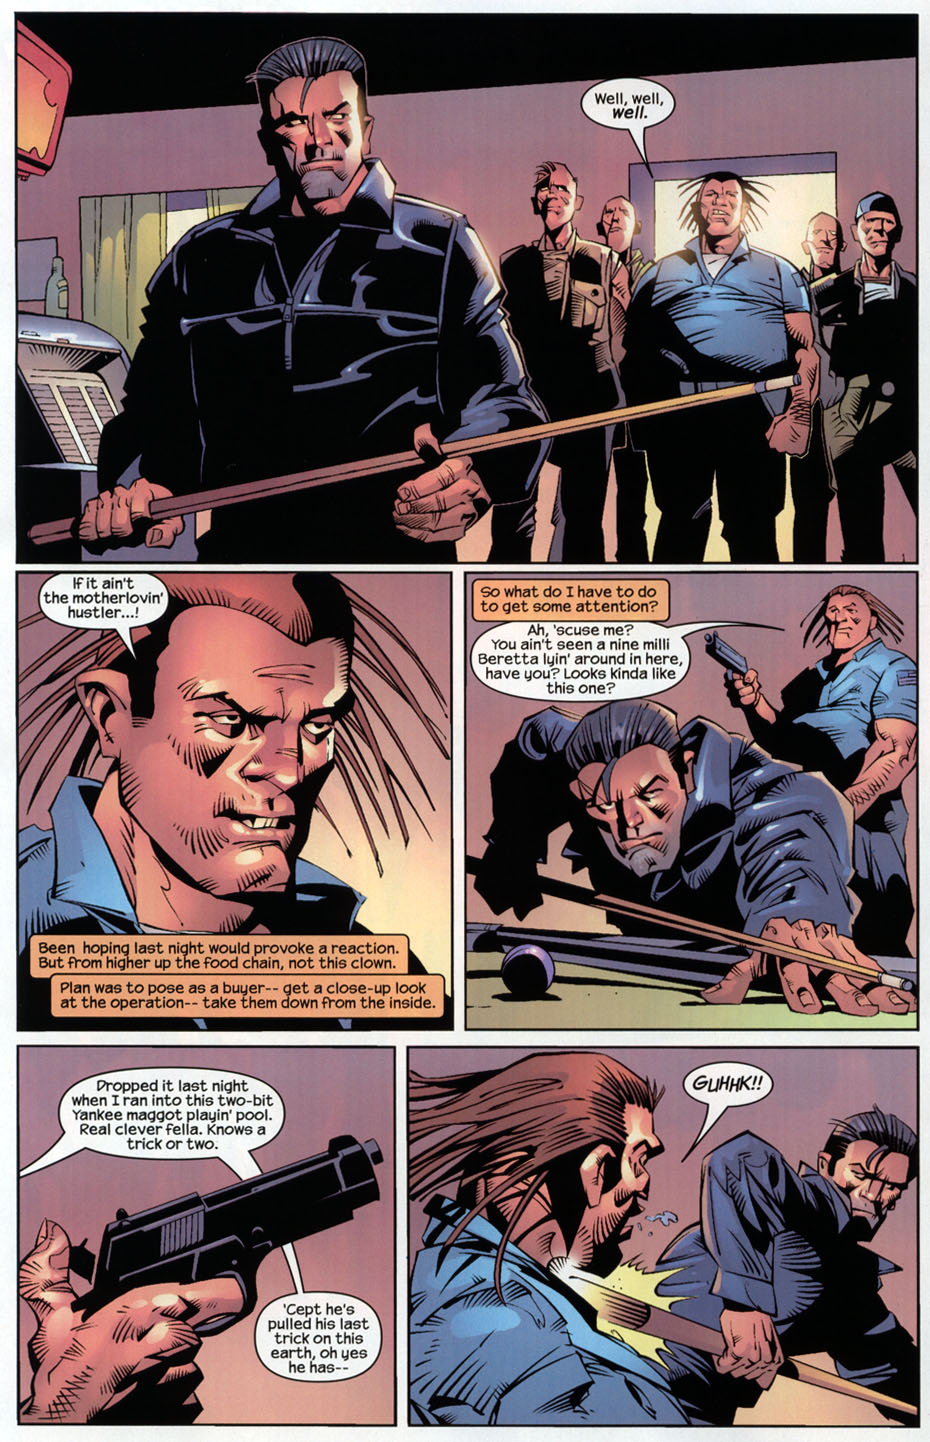 The Punisher (2001) Issue #29 - Streets of Laredo #02 #29 - English 12